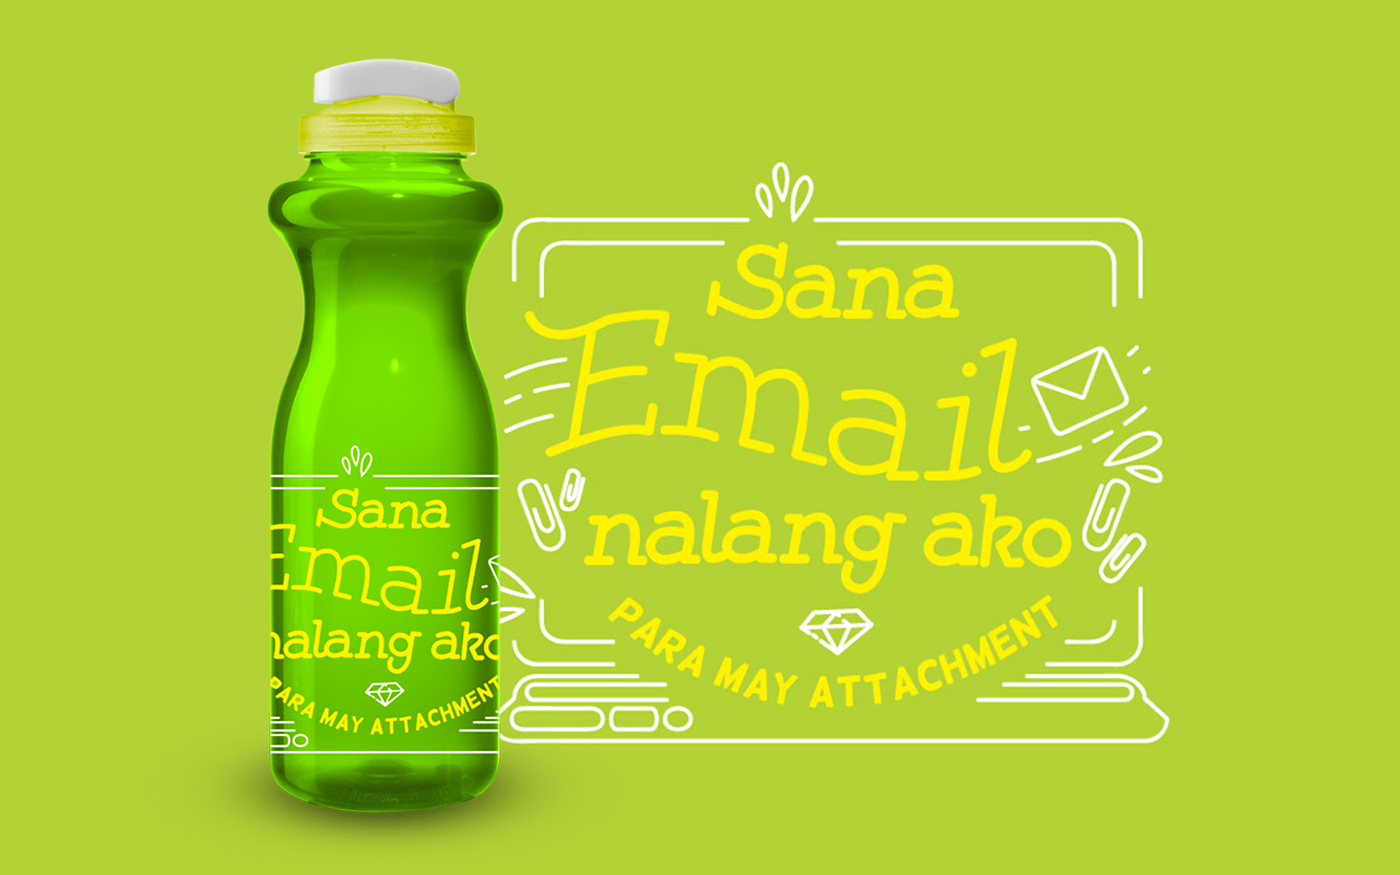 nestea cursive vibrant pitcher tumbler collectibles drink brand Pickup Lines jokes tagalog hugot